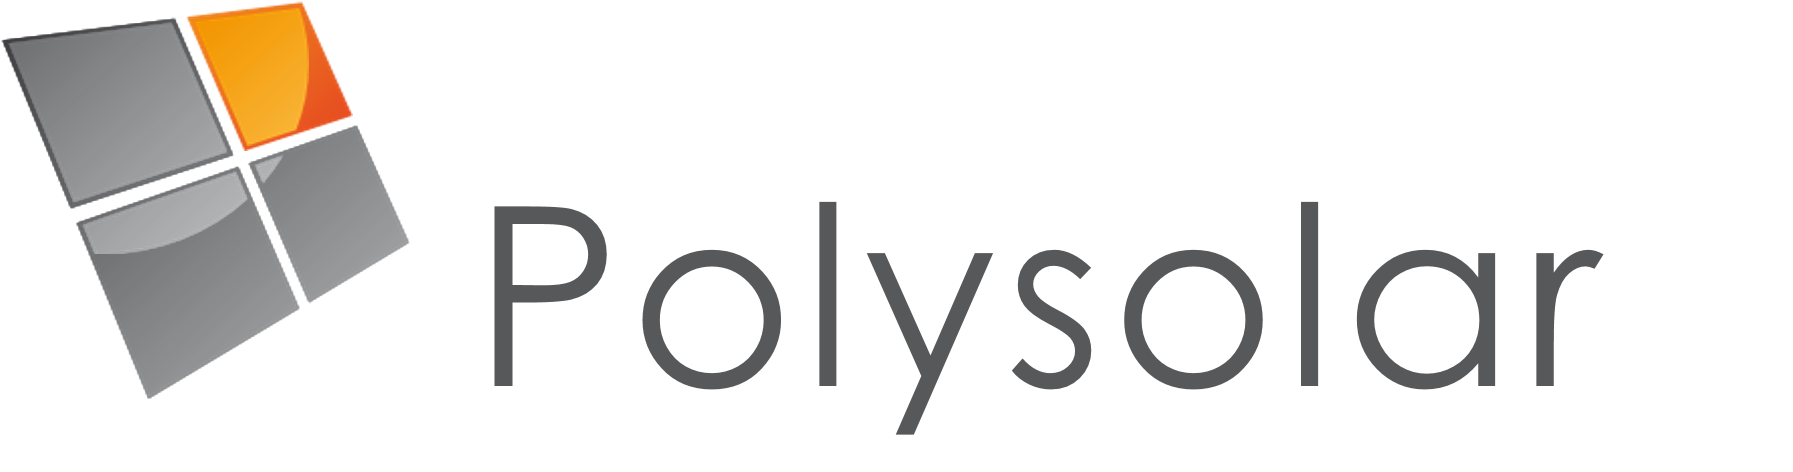 Polysolar Energy Home